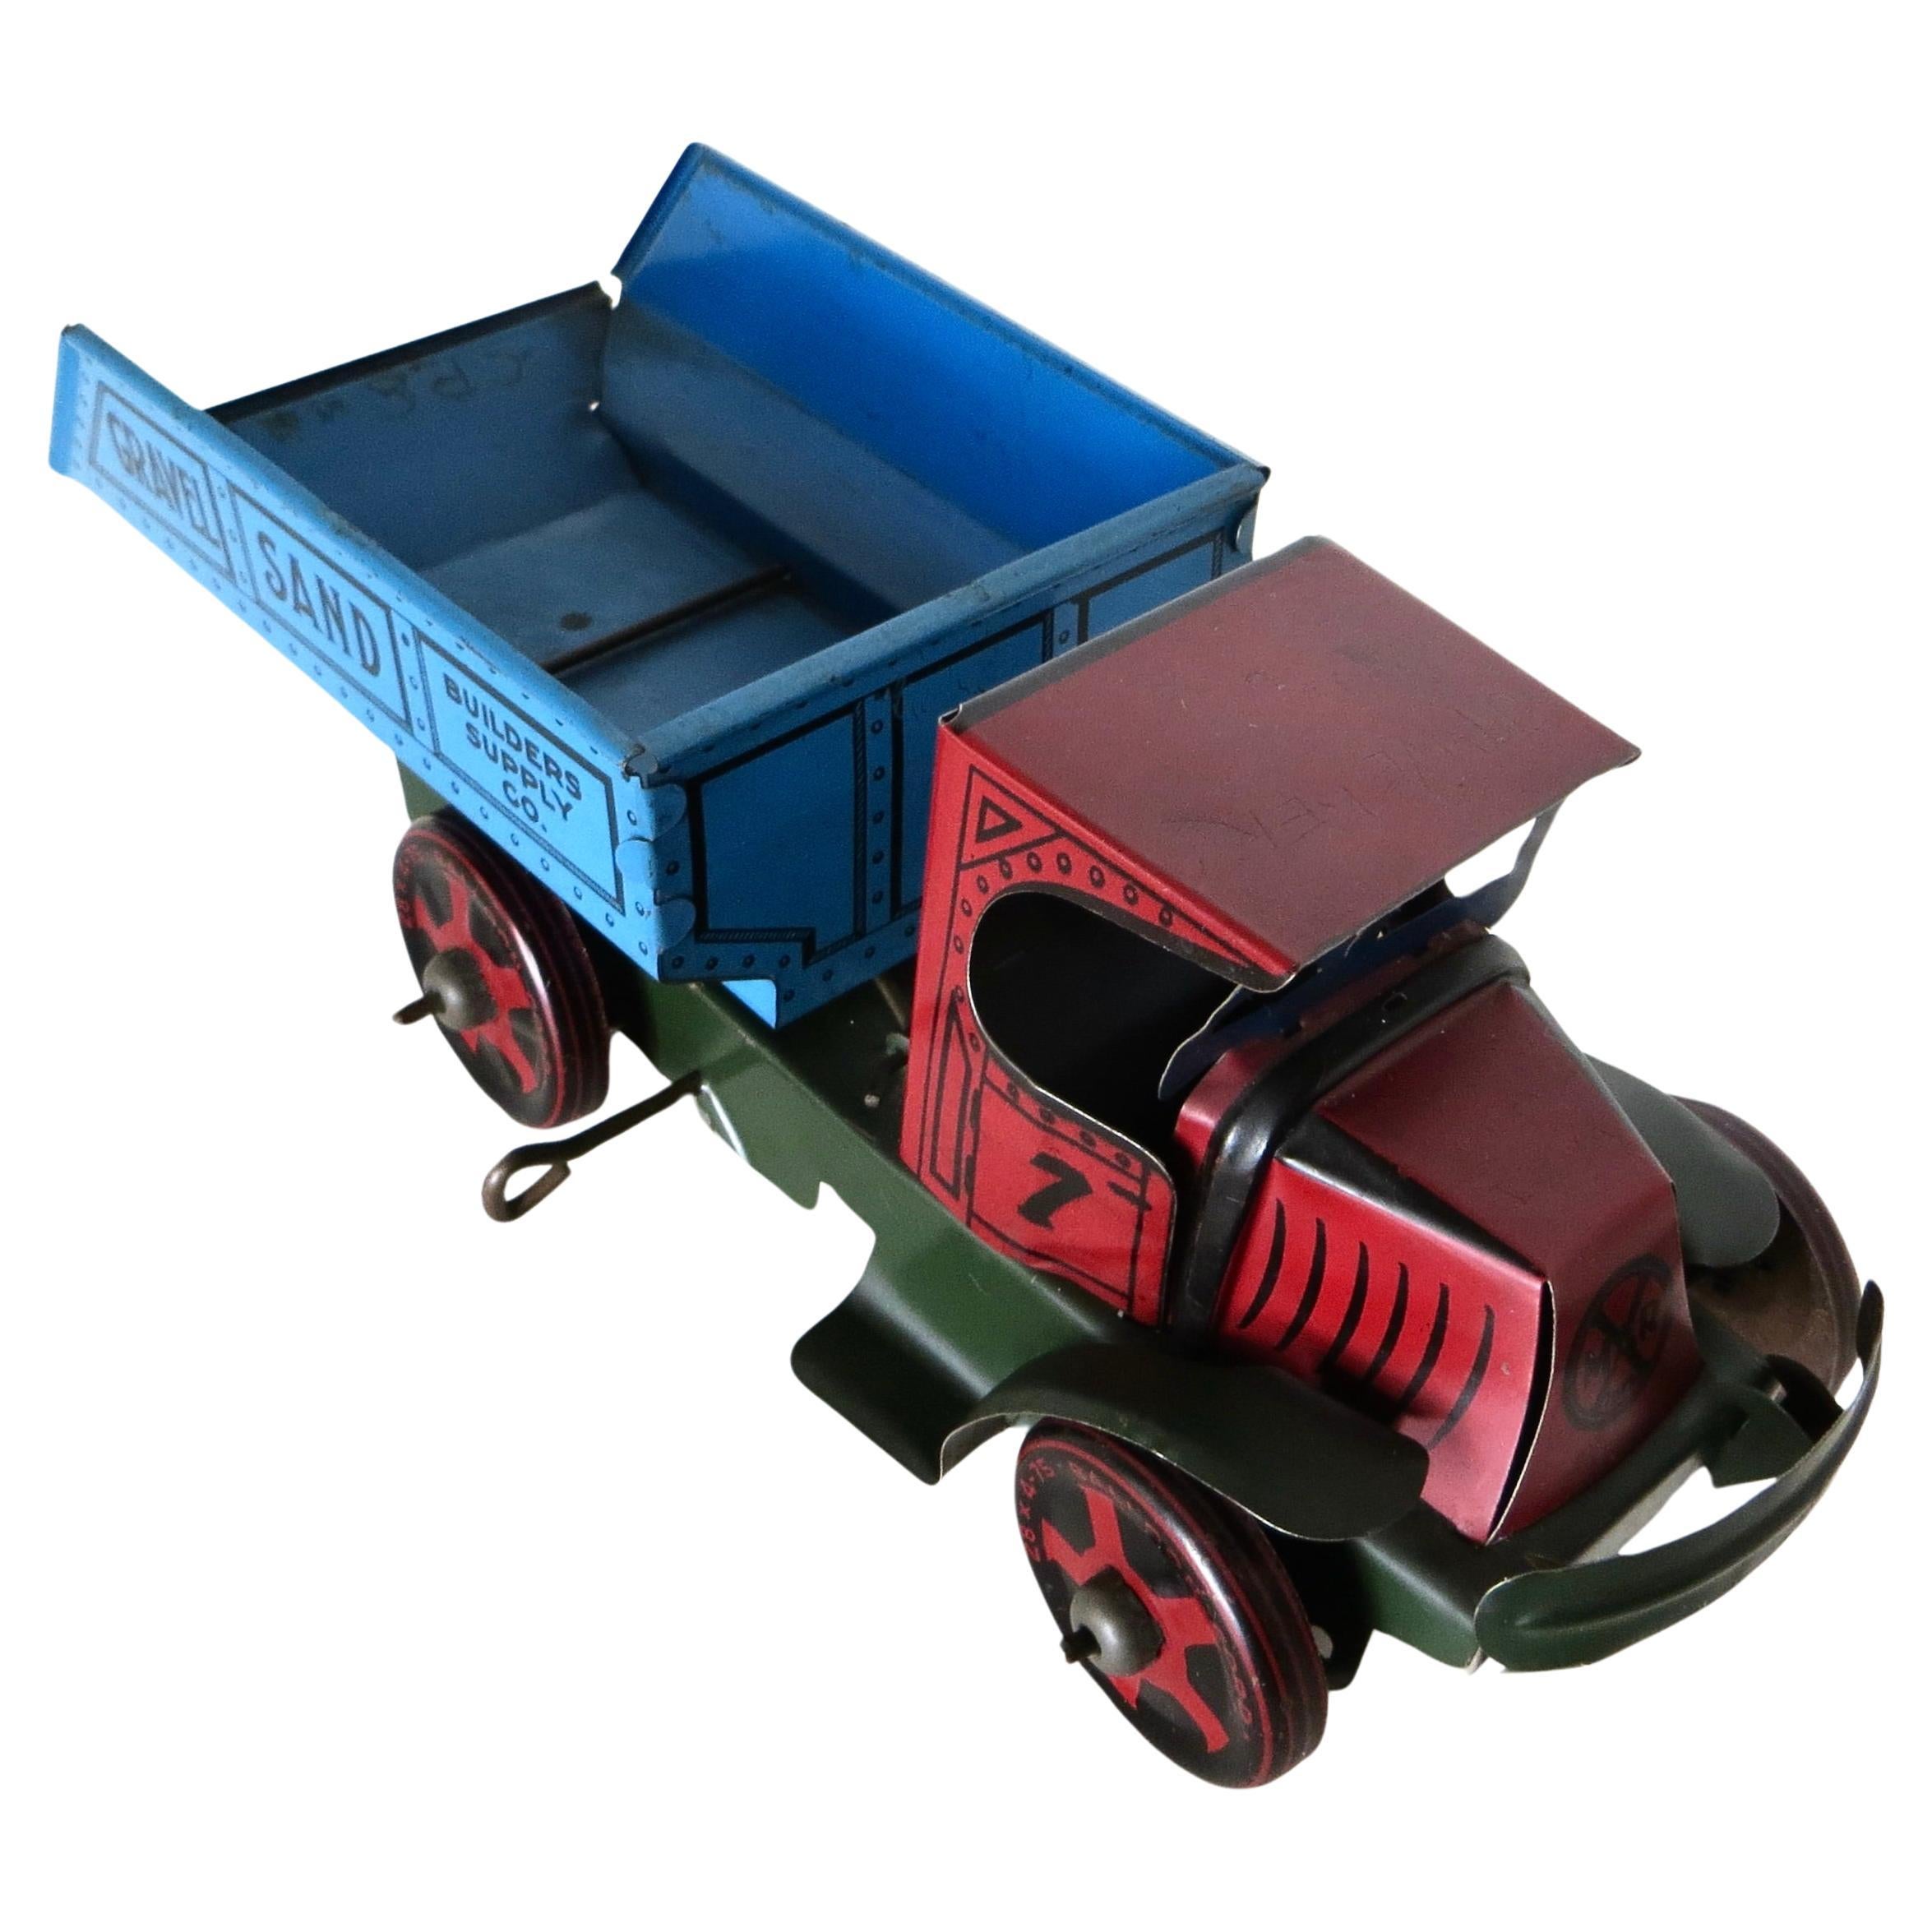 Truck Wind-Up Dump Truck de The Marx Toy Company, N.Y. Américain vers 1930